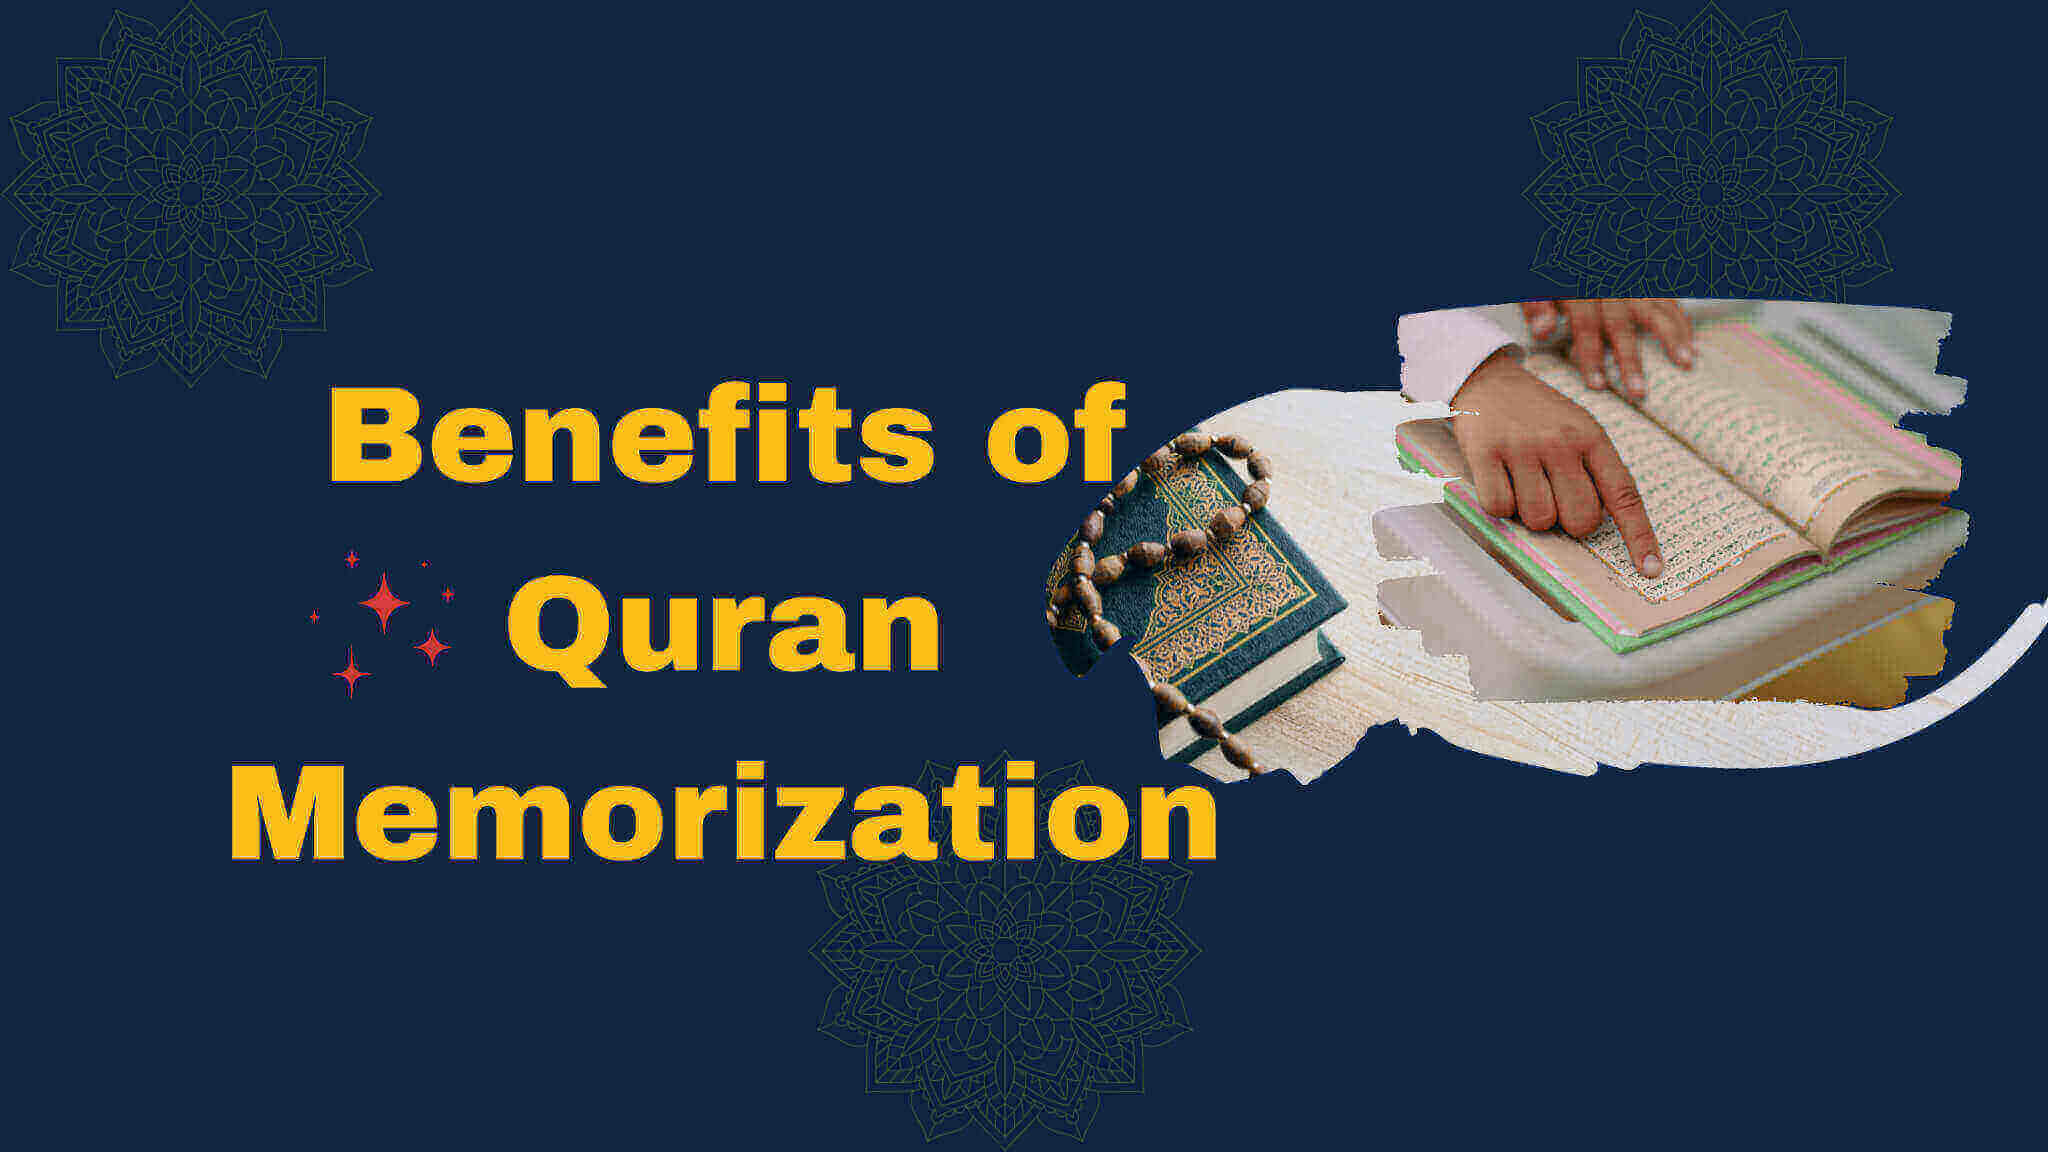 Benefits of quran memorization